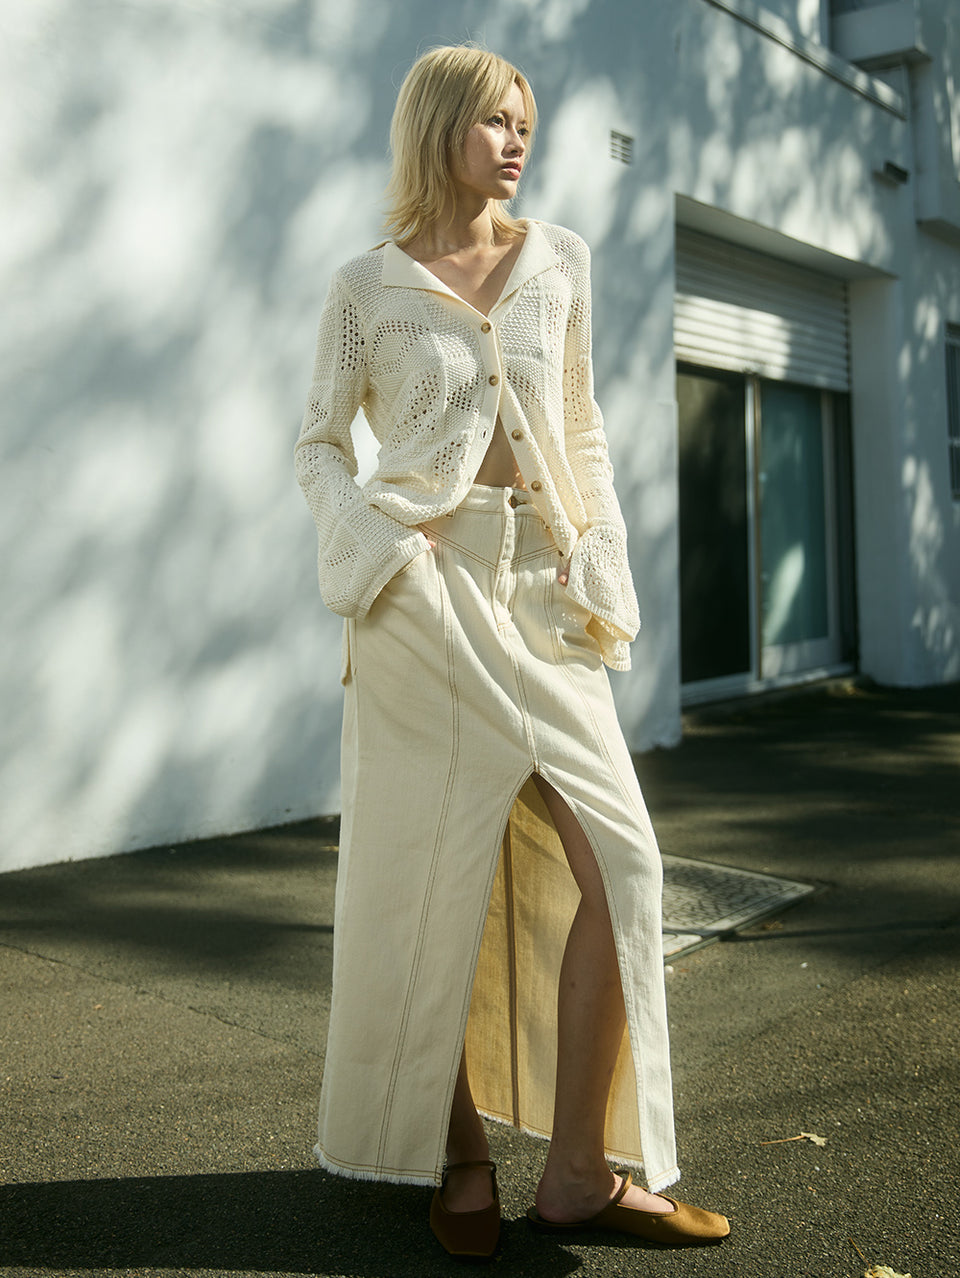 Elena Skirt Cream KIVARI | Model wears cream denim skirt campaign